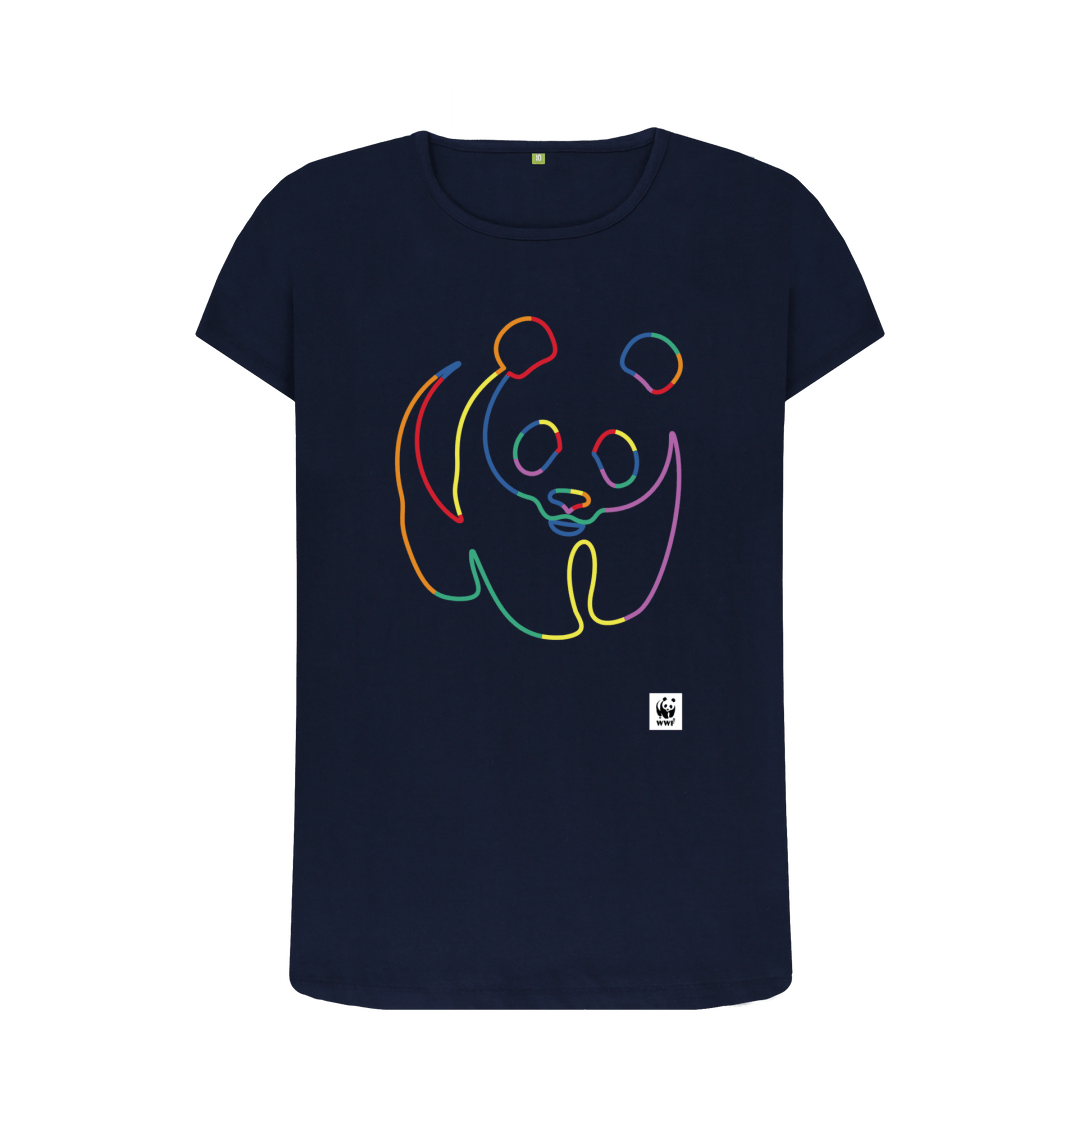 Wwf Rainbow Panda T Shirt 